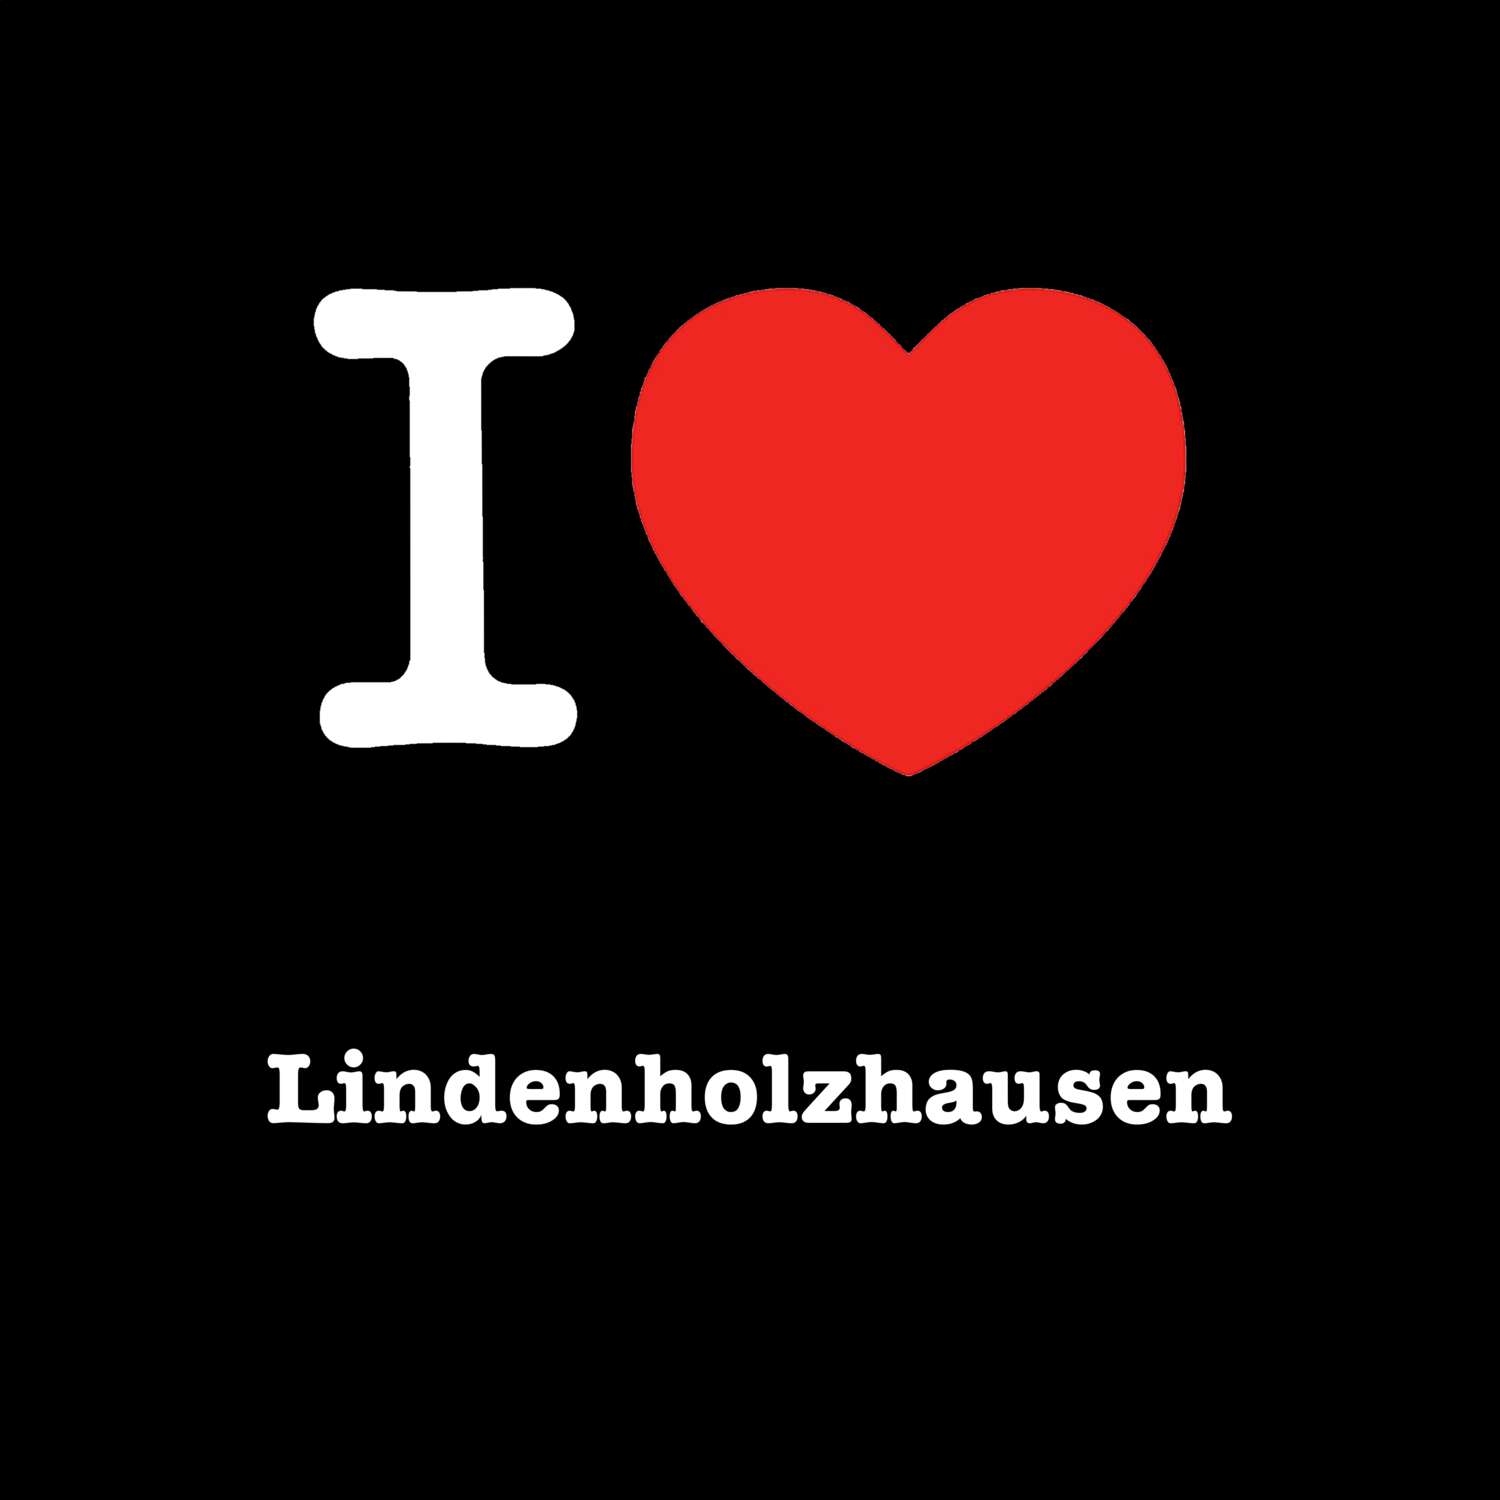 Lindenholzhausen T-Shirt »I love«